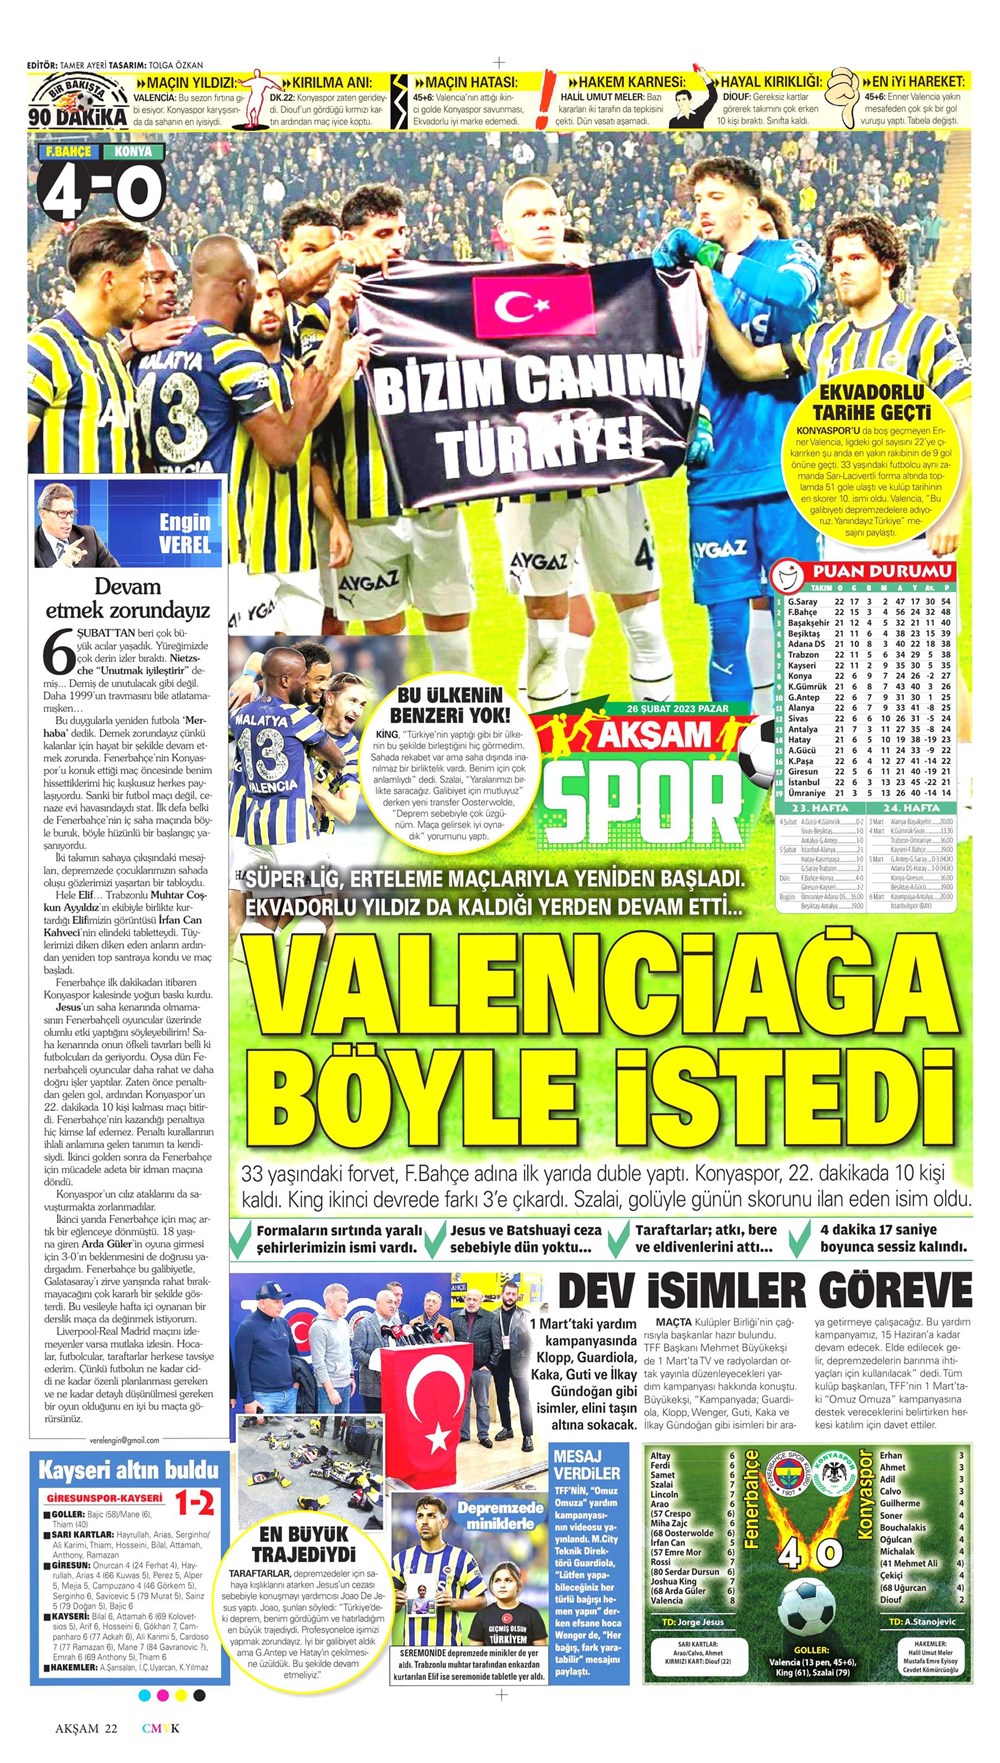 "Valenci'ağa' böyle istedi" - Sporun manşetleri  - 6. Foto